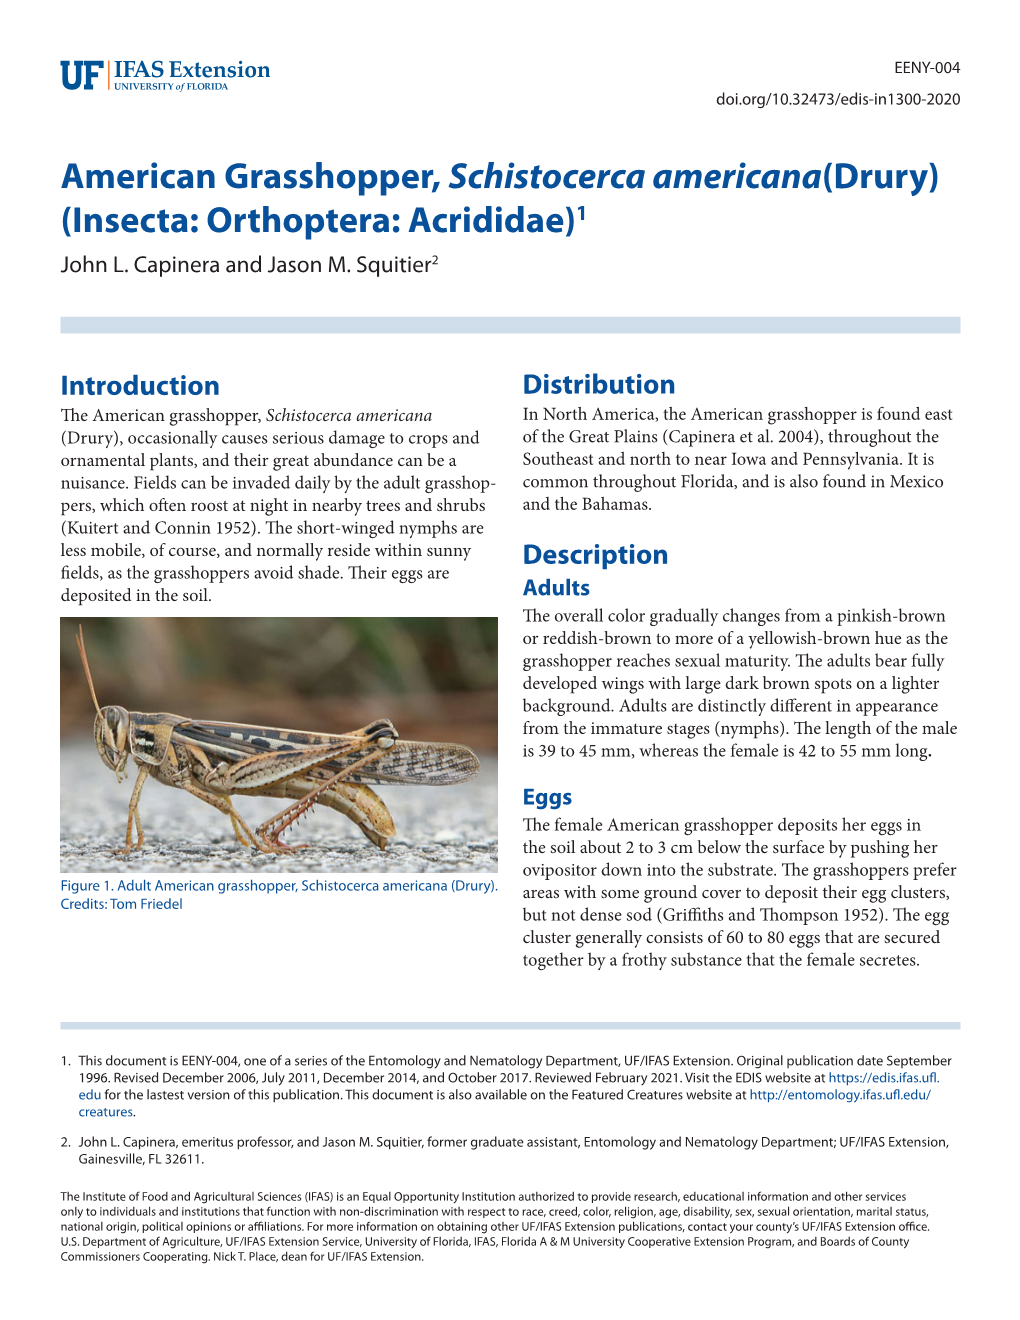 American Grasshopper, Schistocerca Americana(Drury) (Insecta: Orthoptera: Acrididae)1 John L